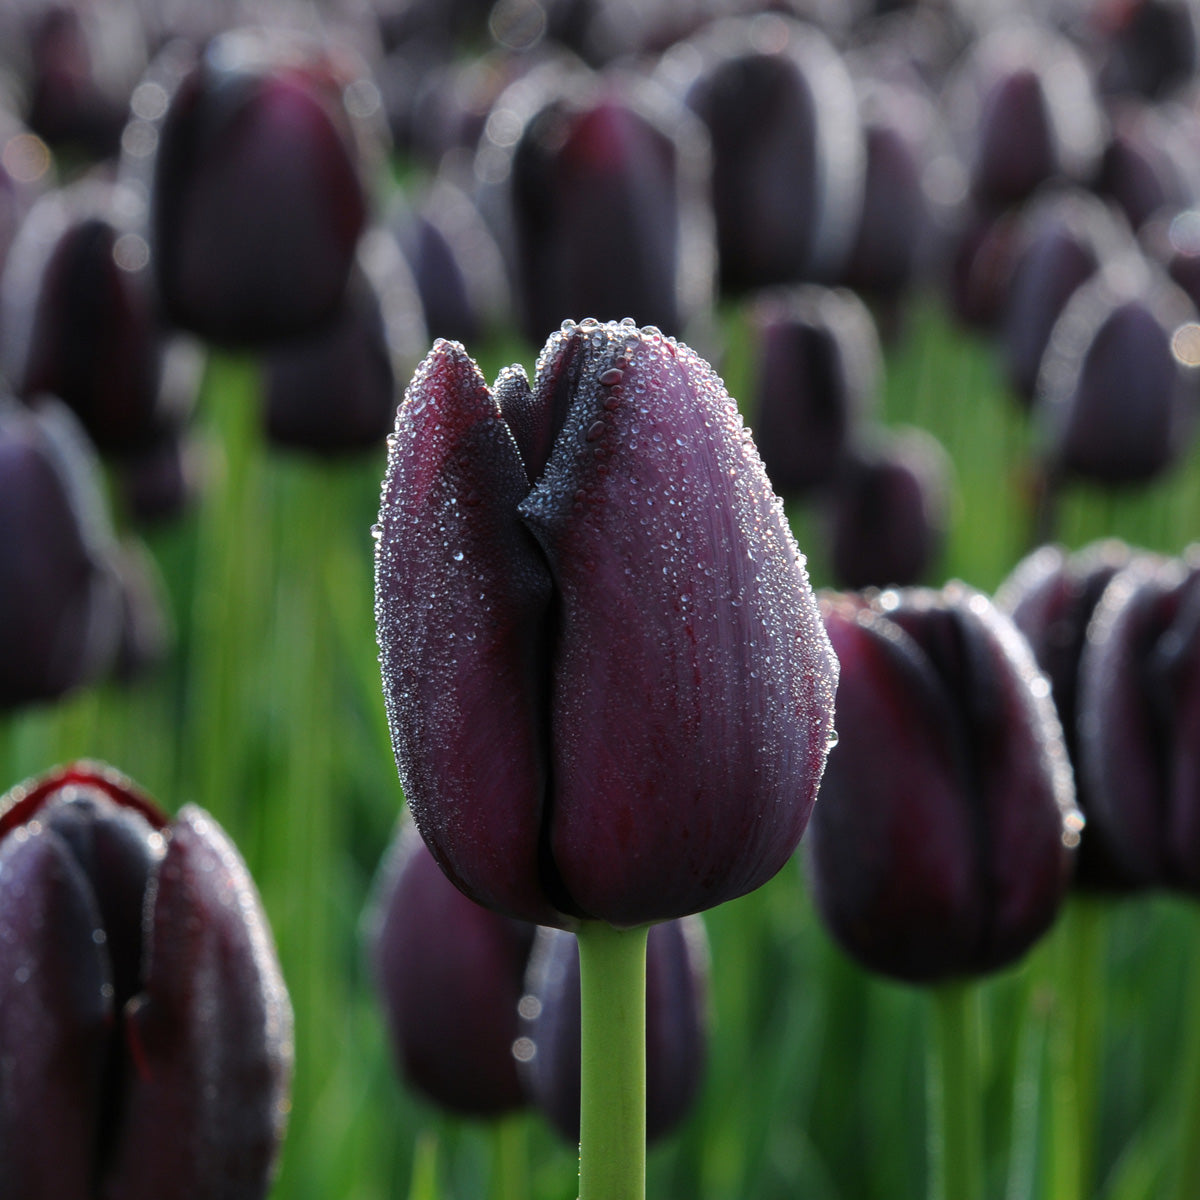 Tulipa Queen of the Night x40 - Tulipán Negro - Bulbos de flores perennes